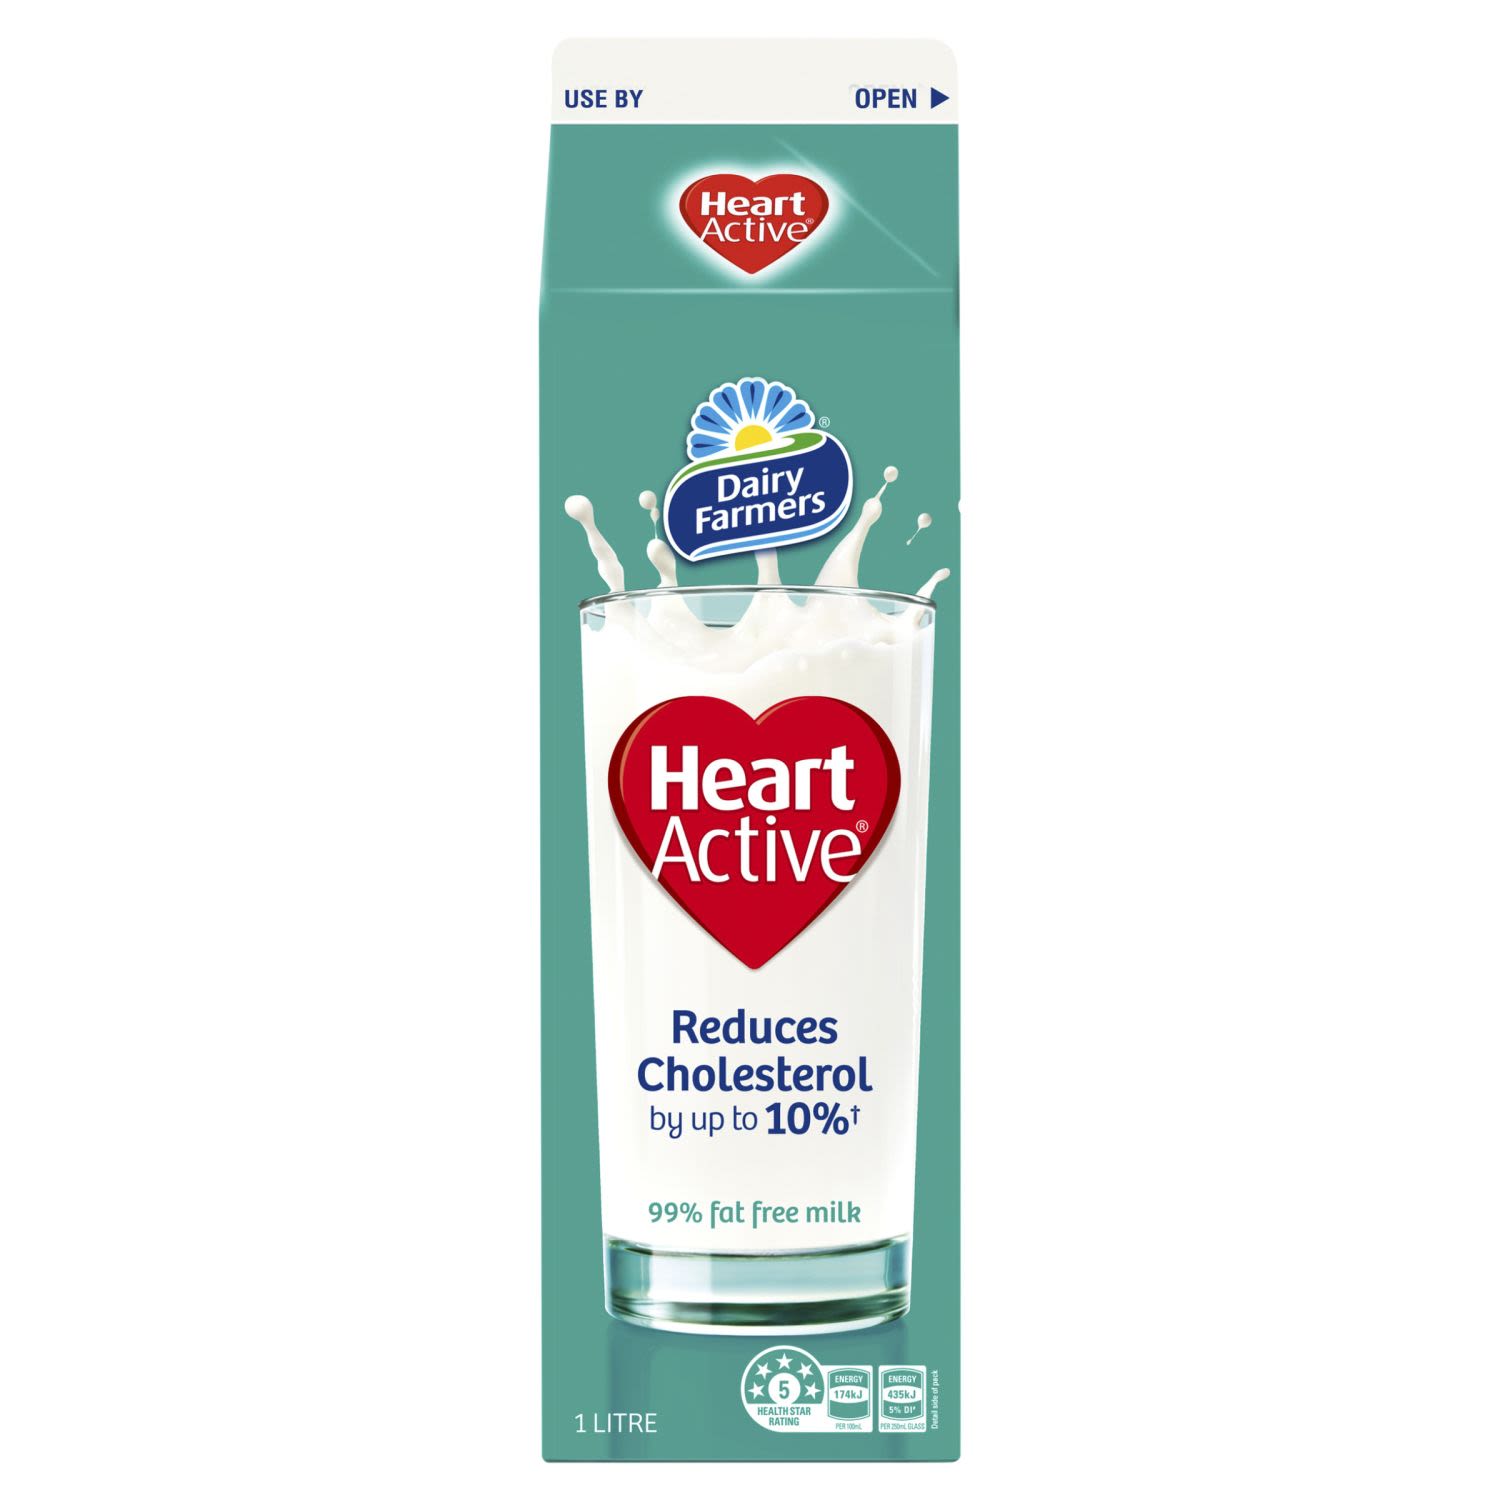 Dairy Farmers Heart Active Milk, 1 Litre